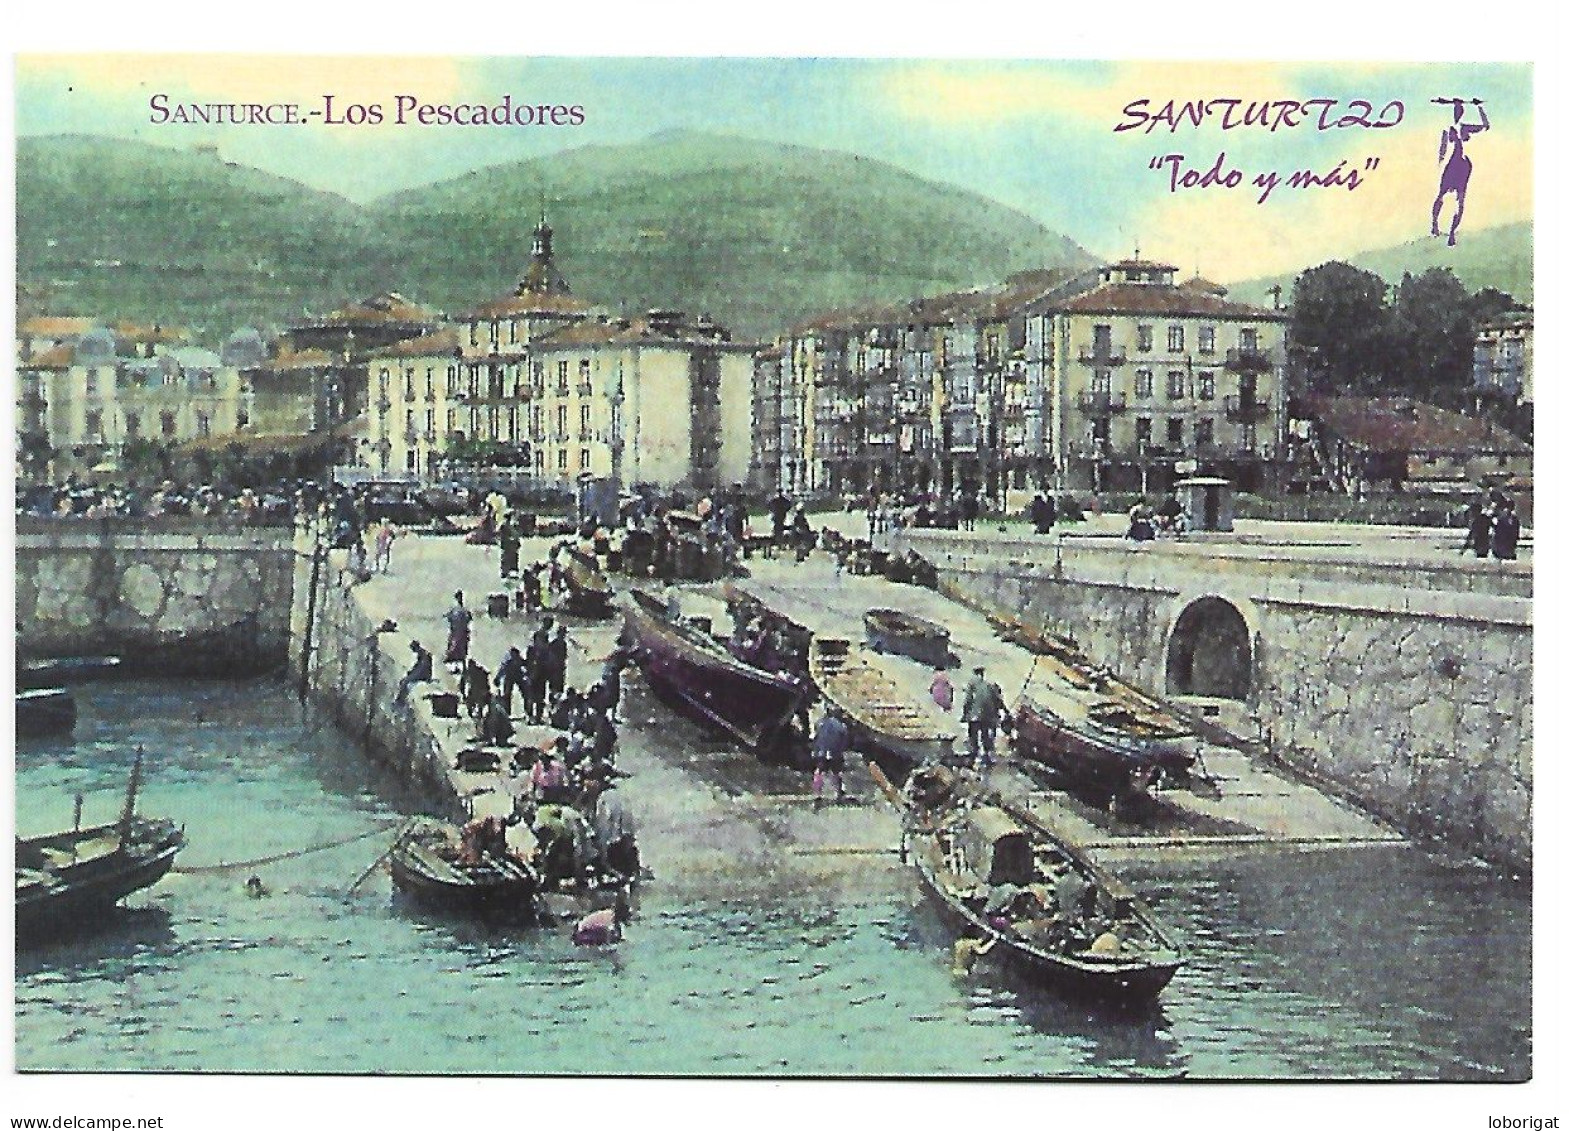 OFICINA DE TURISMO DE SANTURTZI / SANTURTZIKO TURISMO BULEGOA.-  SANTURTZI - SANTURCE - VIZCAYA - (PAIS VASCO) - Vizcaya (Bilbao)